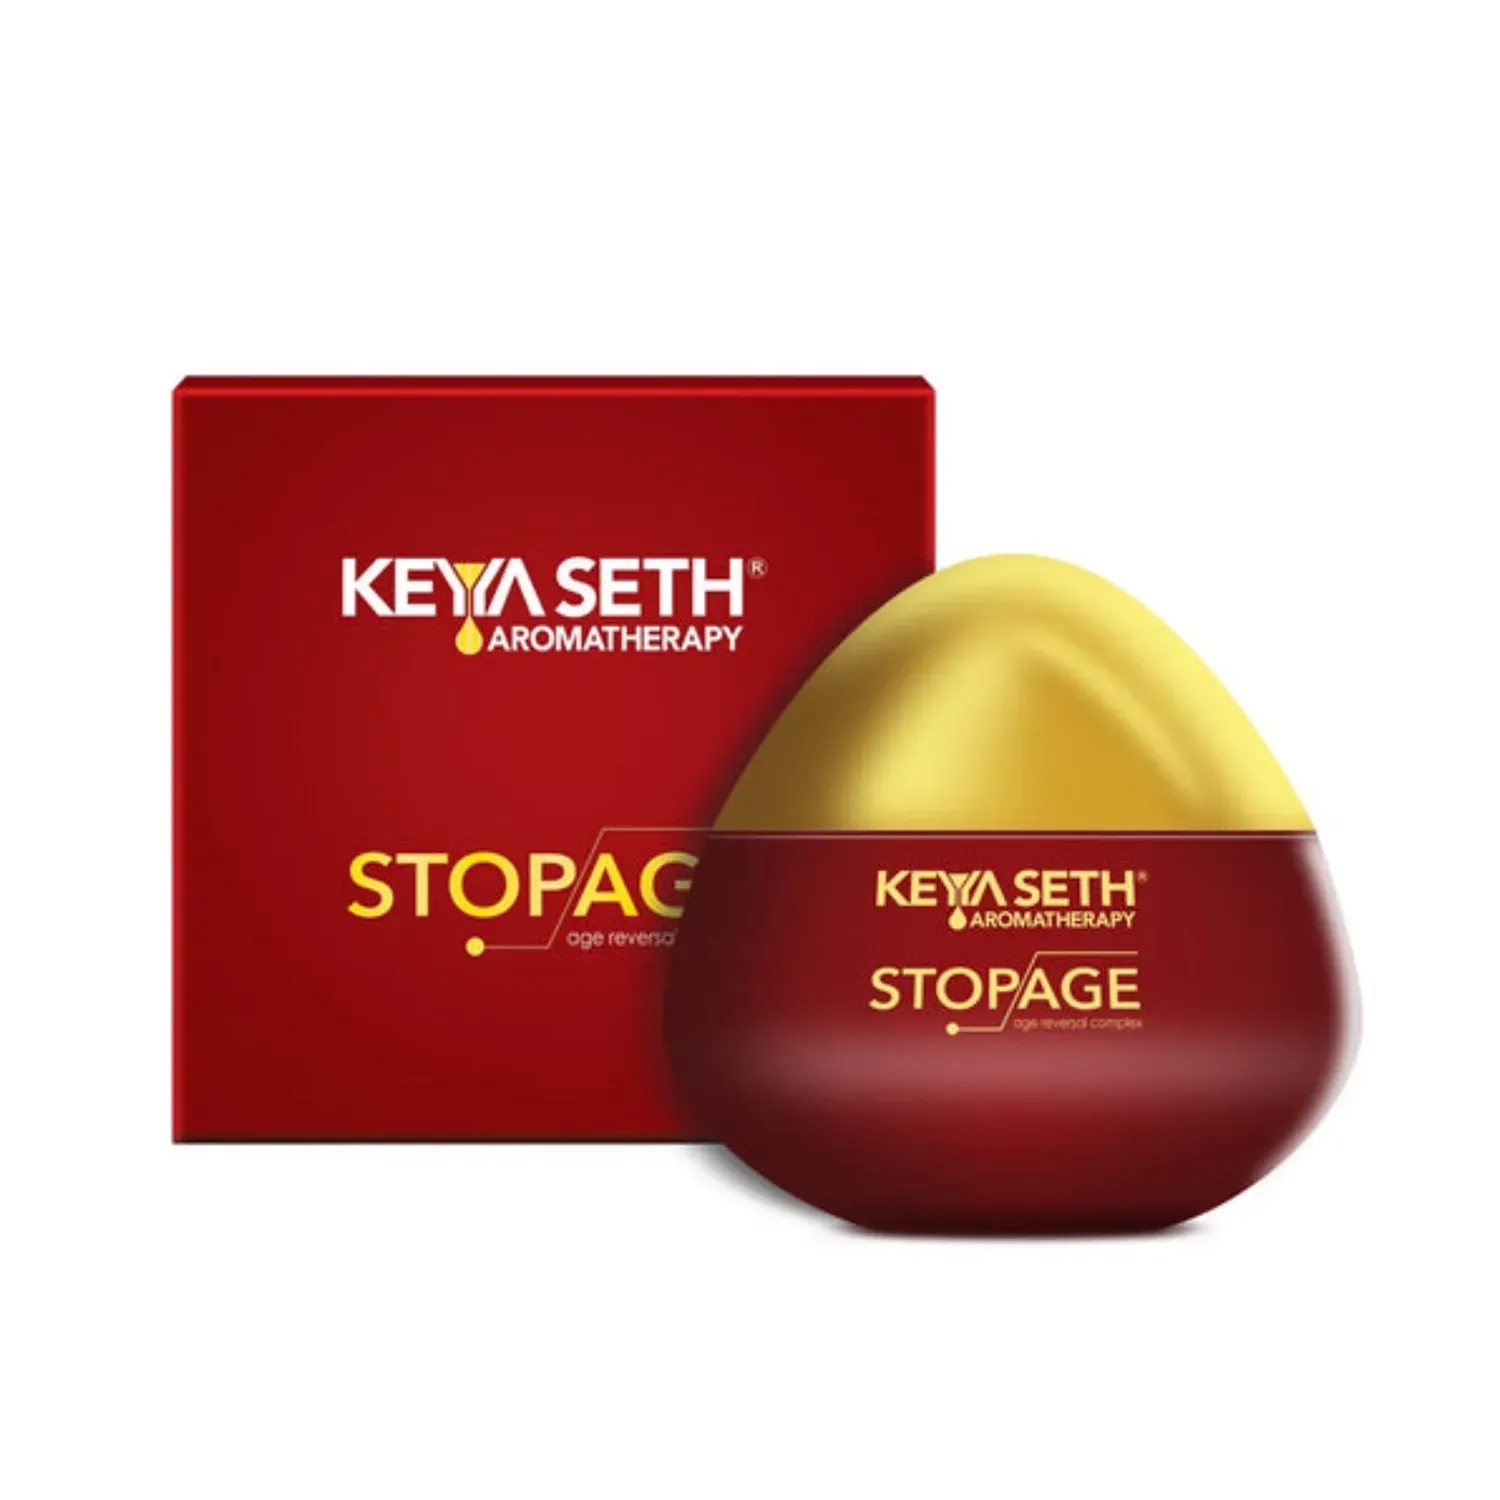 Keya Seth Aromatherapy | Keya Seth Aromatherapy Stop Age Reversal Treatment (10g)